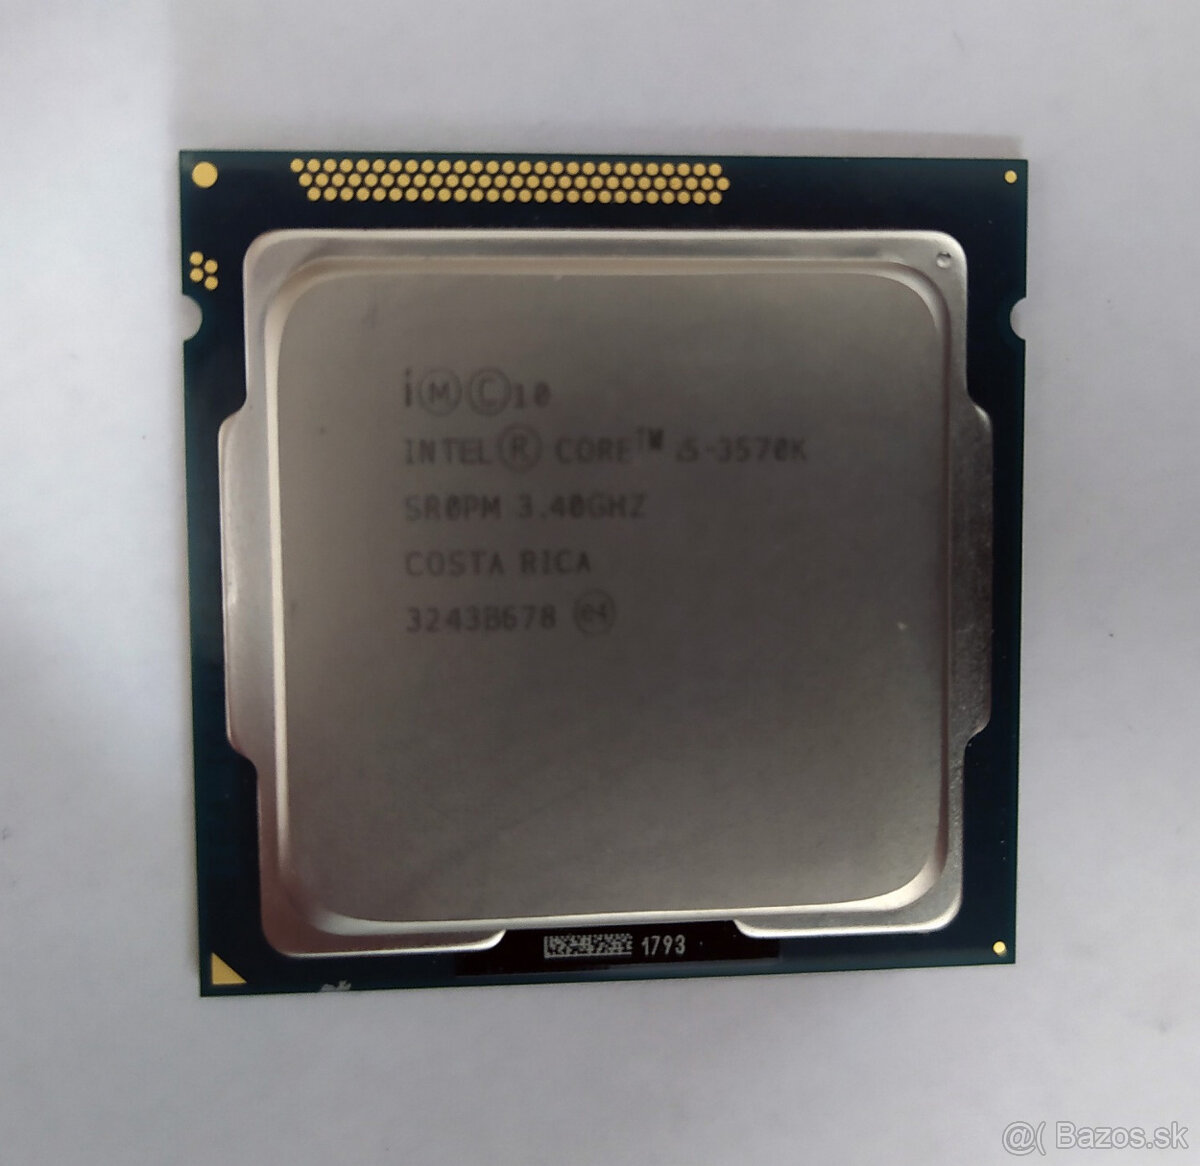 procesor Intel Core i5-3570K LGA1155